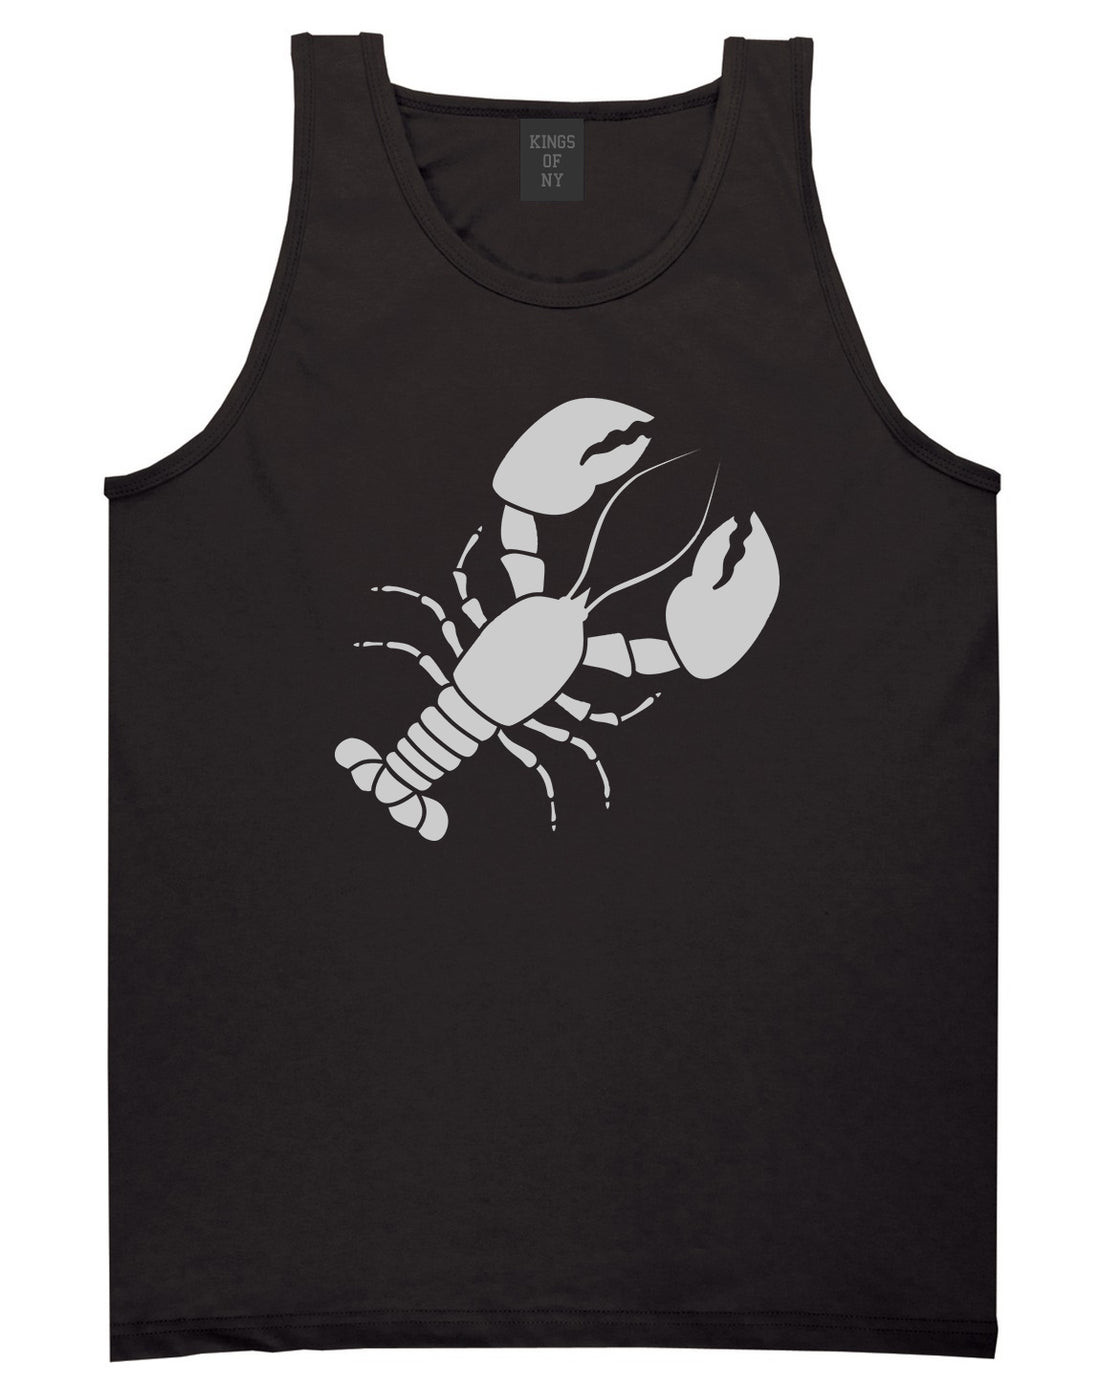 Lobster Mens Tank Top Shirt Black by Kings Of NY